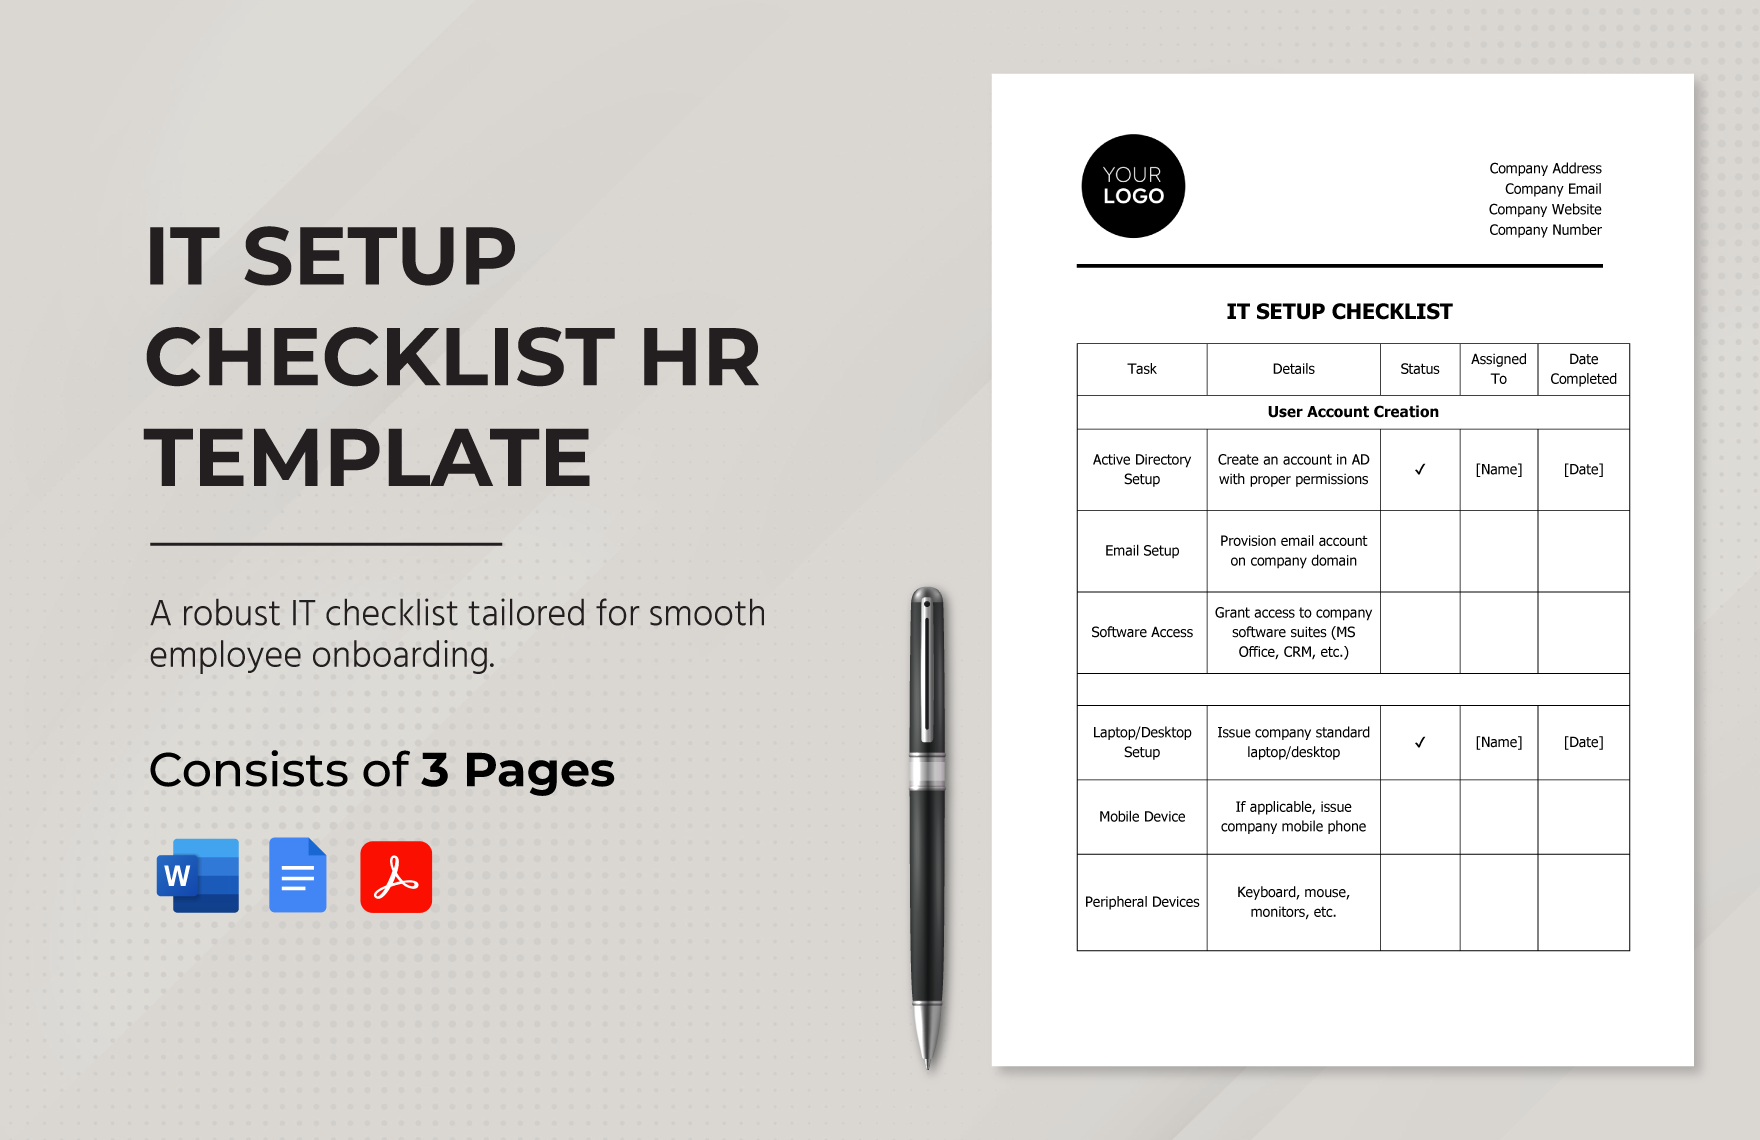 IT Setup Checklist HR Template